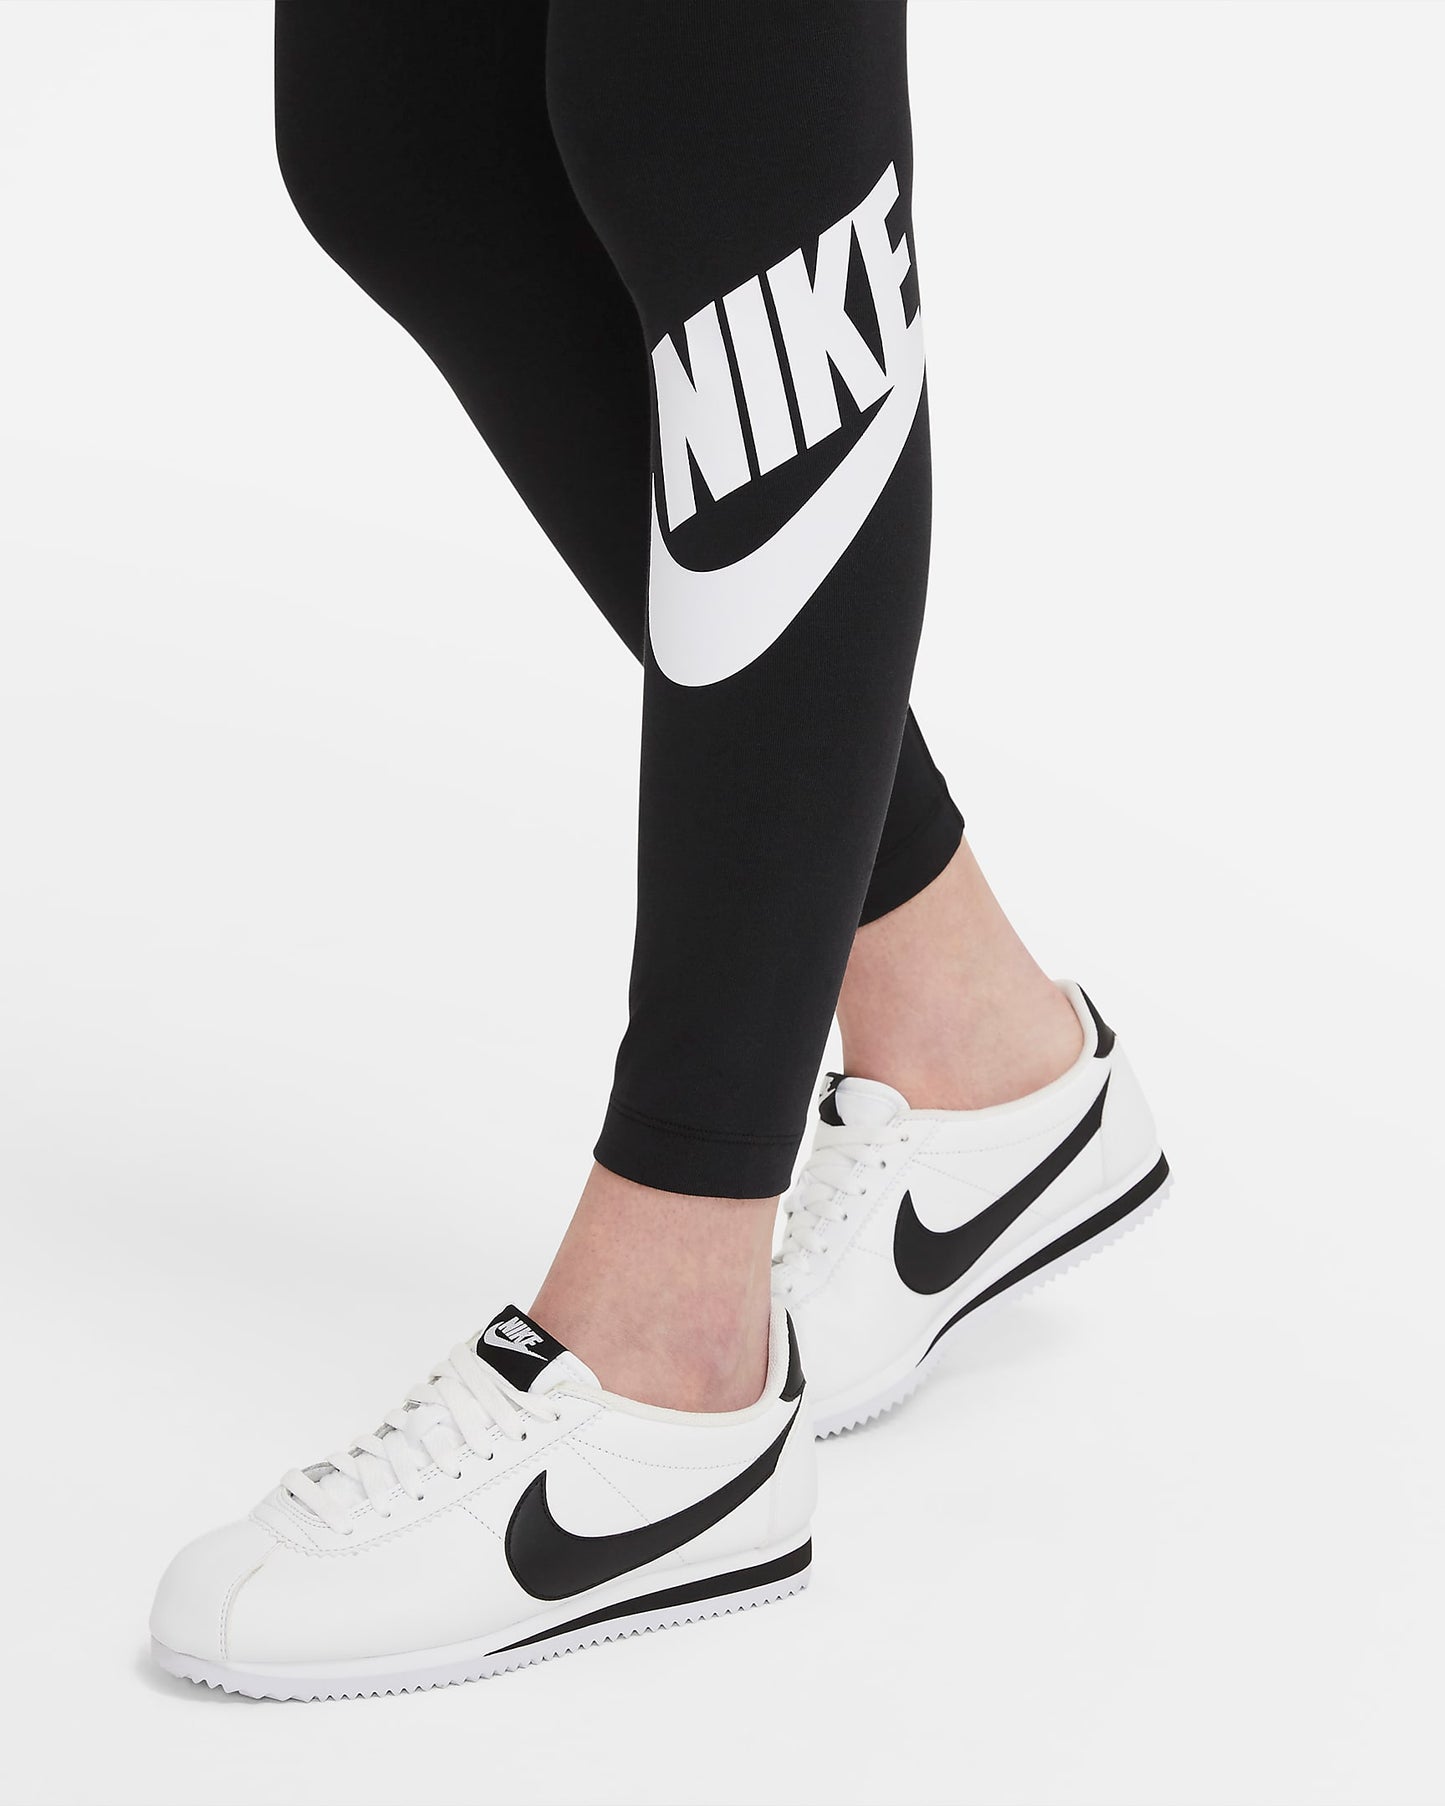 Nike Sportswear Essential Women's High-Waisted Graphic Leggings  - (CZ8528-010) - TI - 5